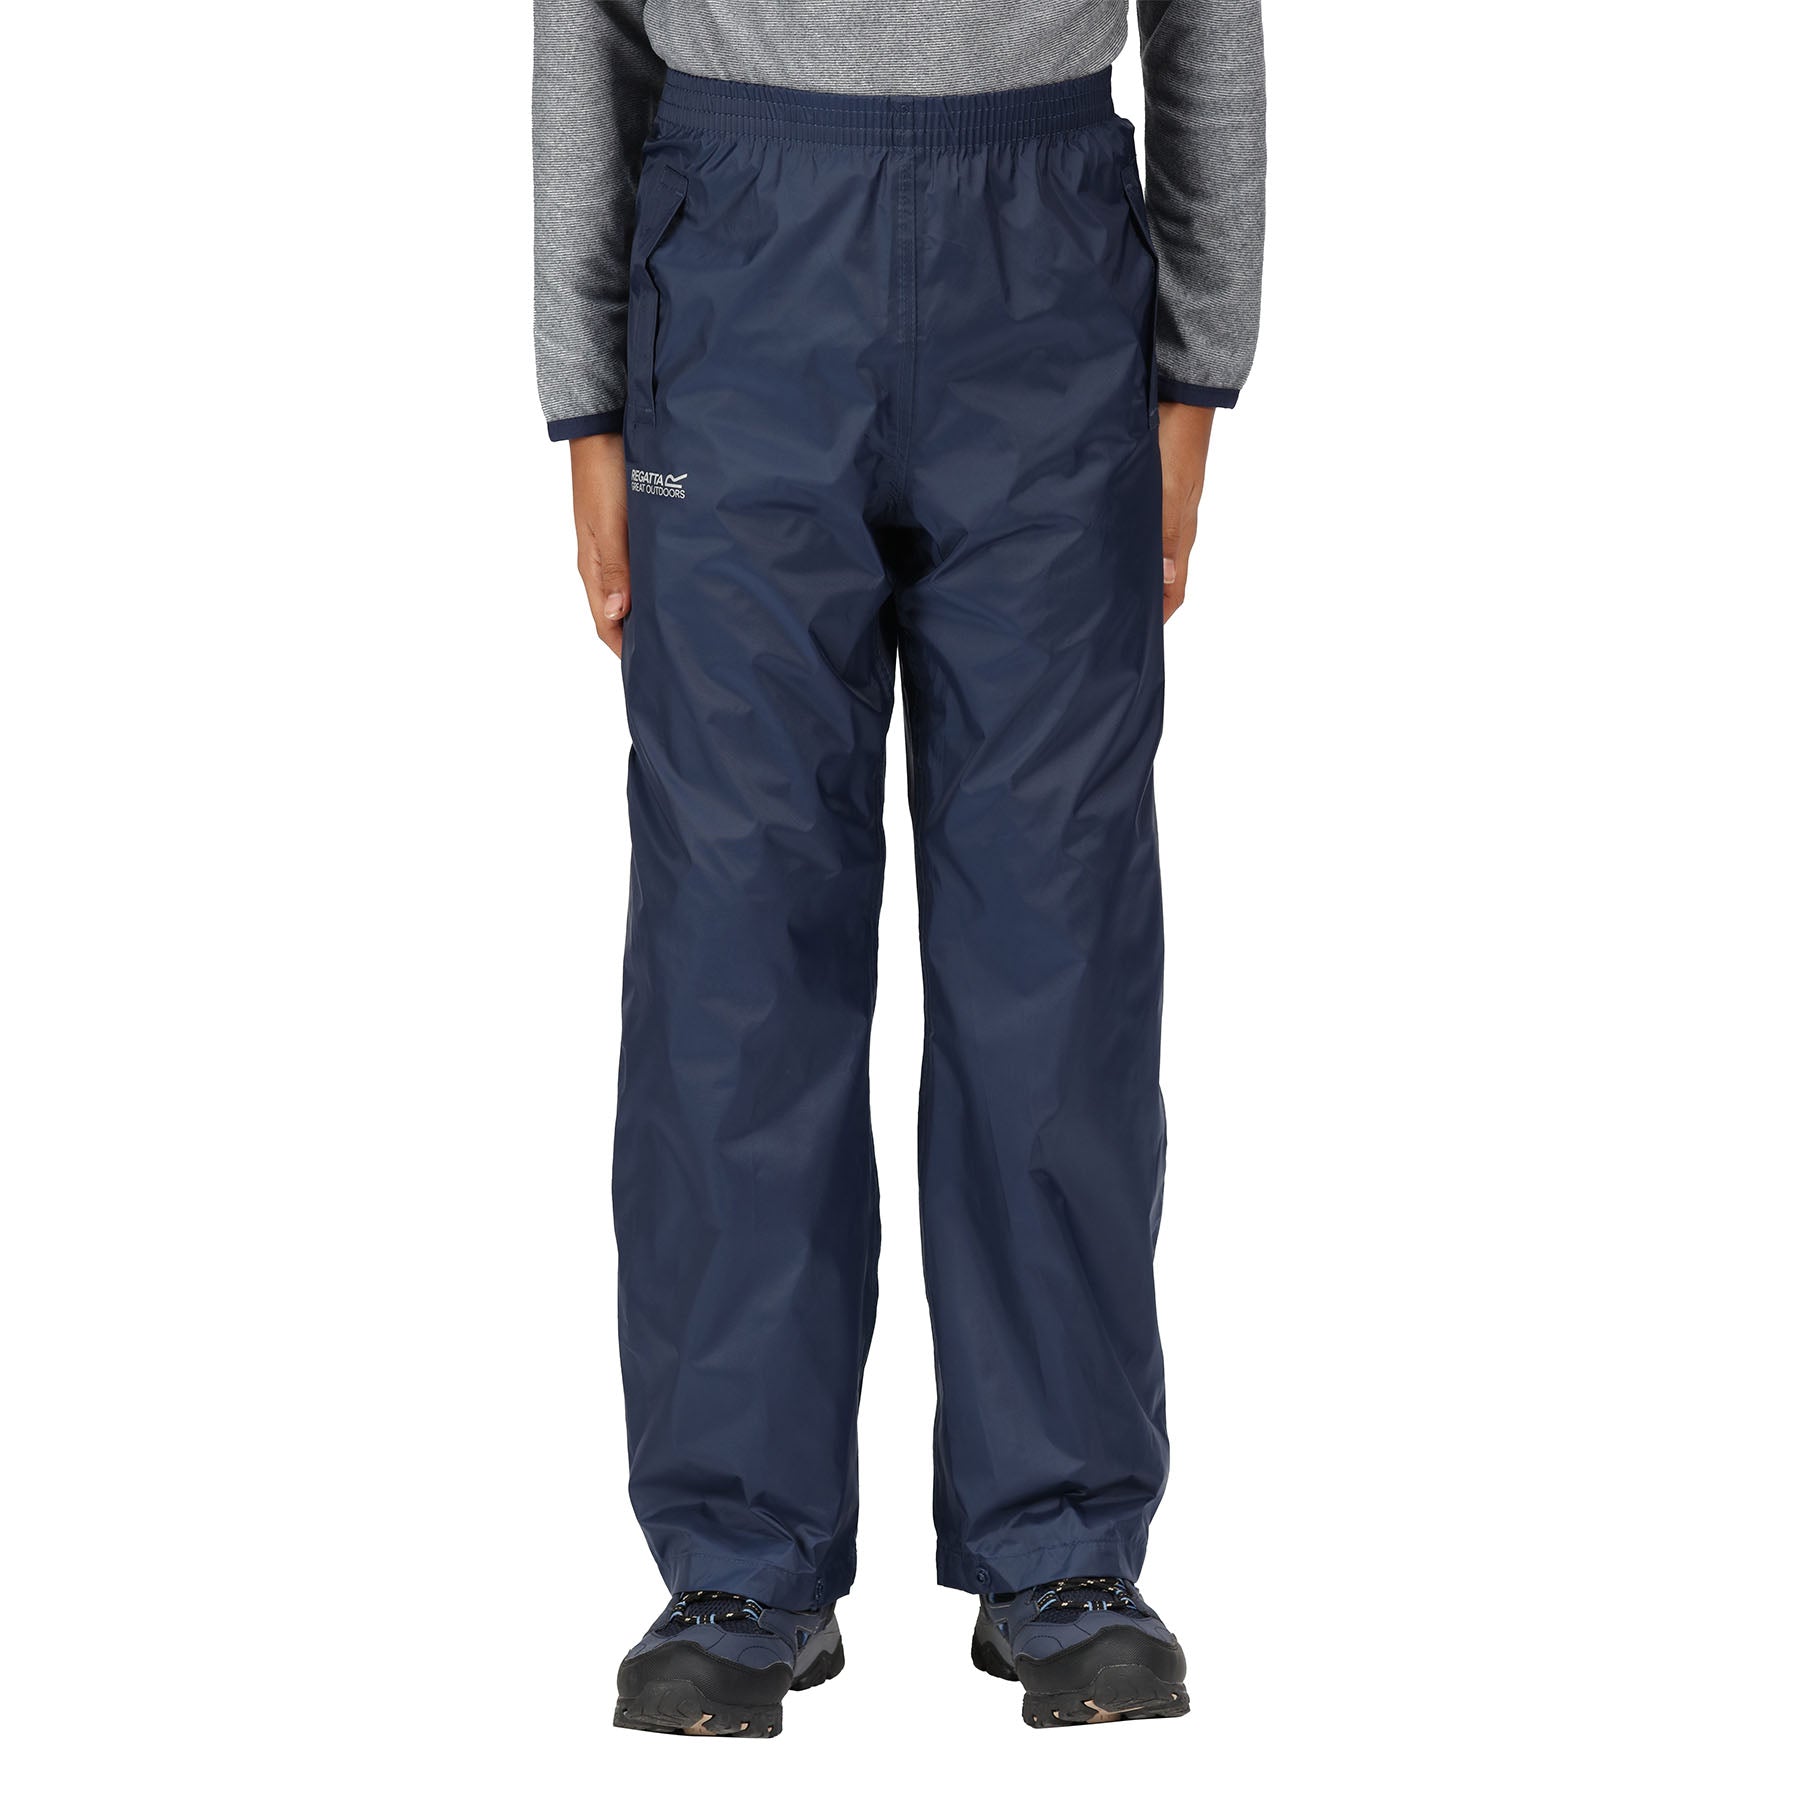 Didriksons Gordon Pants 3 - Waterproof Trousers Kids | Buy online |  Alpinetrek.co.uk